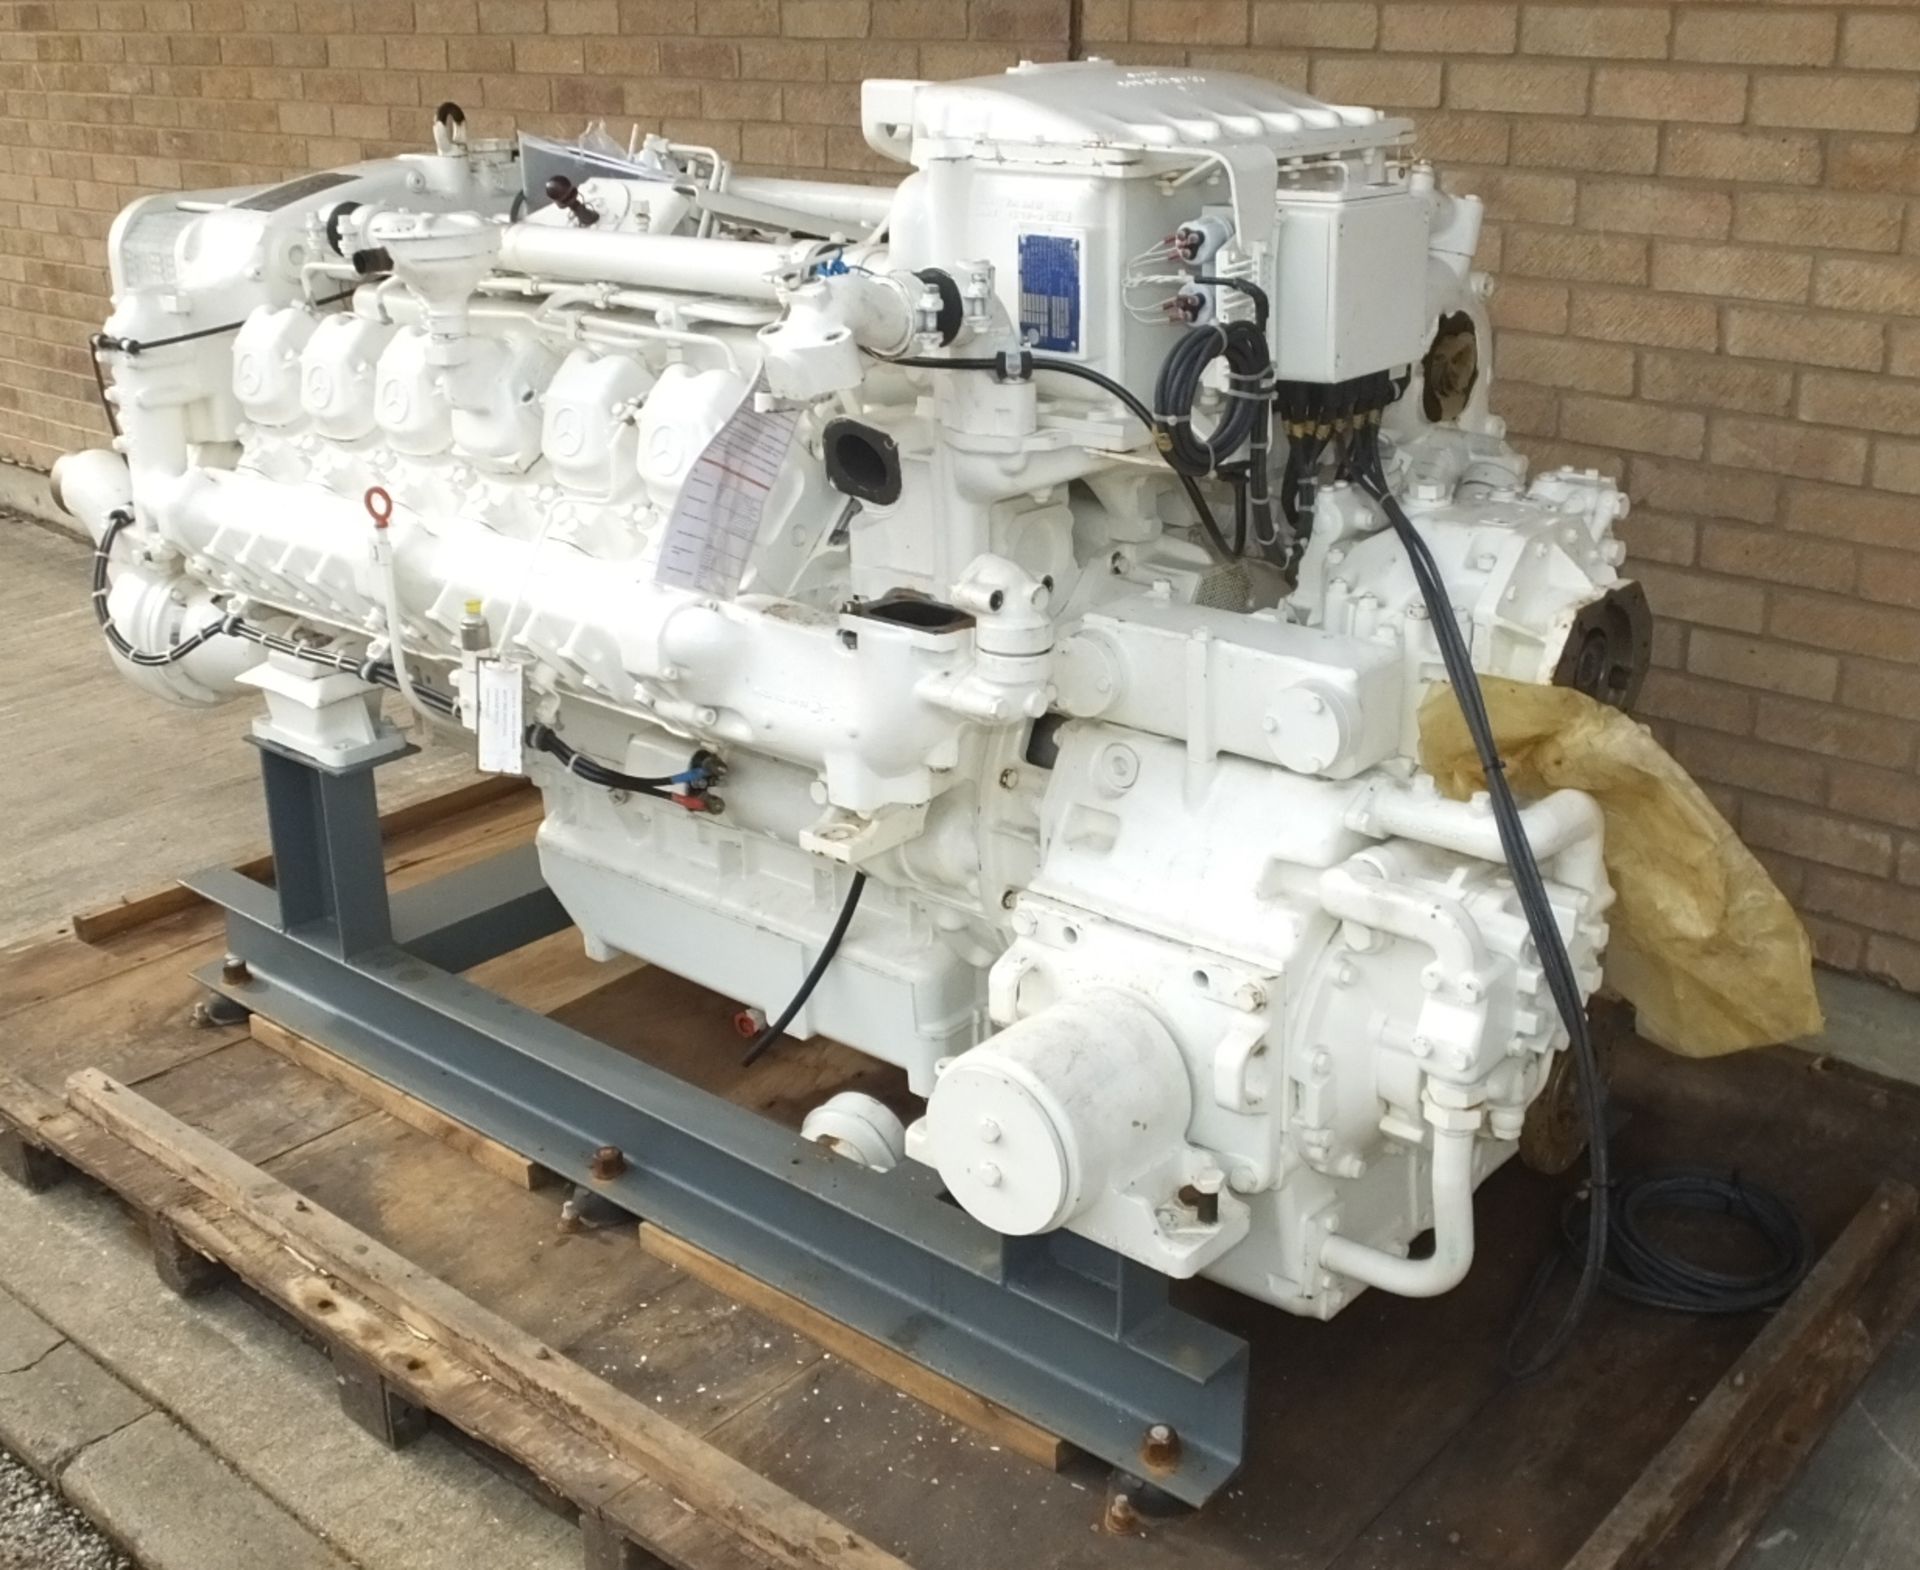 MTU 12V 183 engine - engine code OM 444 LA - 610kW - 1310HP - 2100 RPM - Gearbox ZF Marine - Image 7 of 37